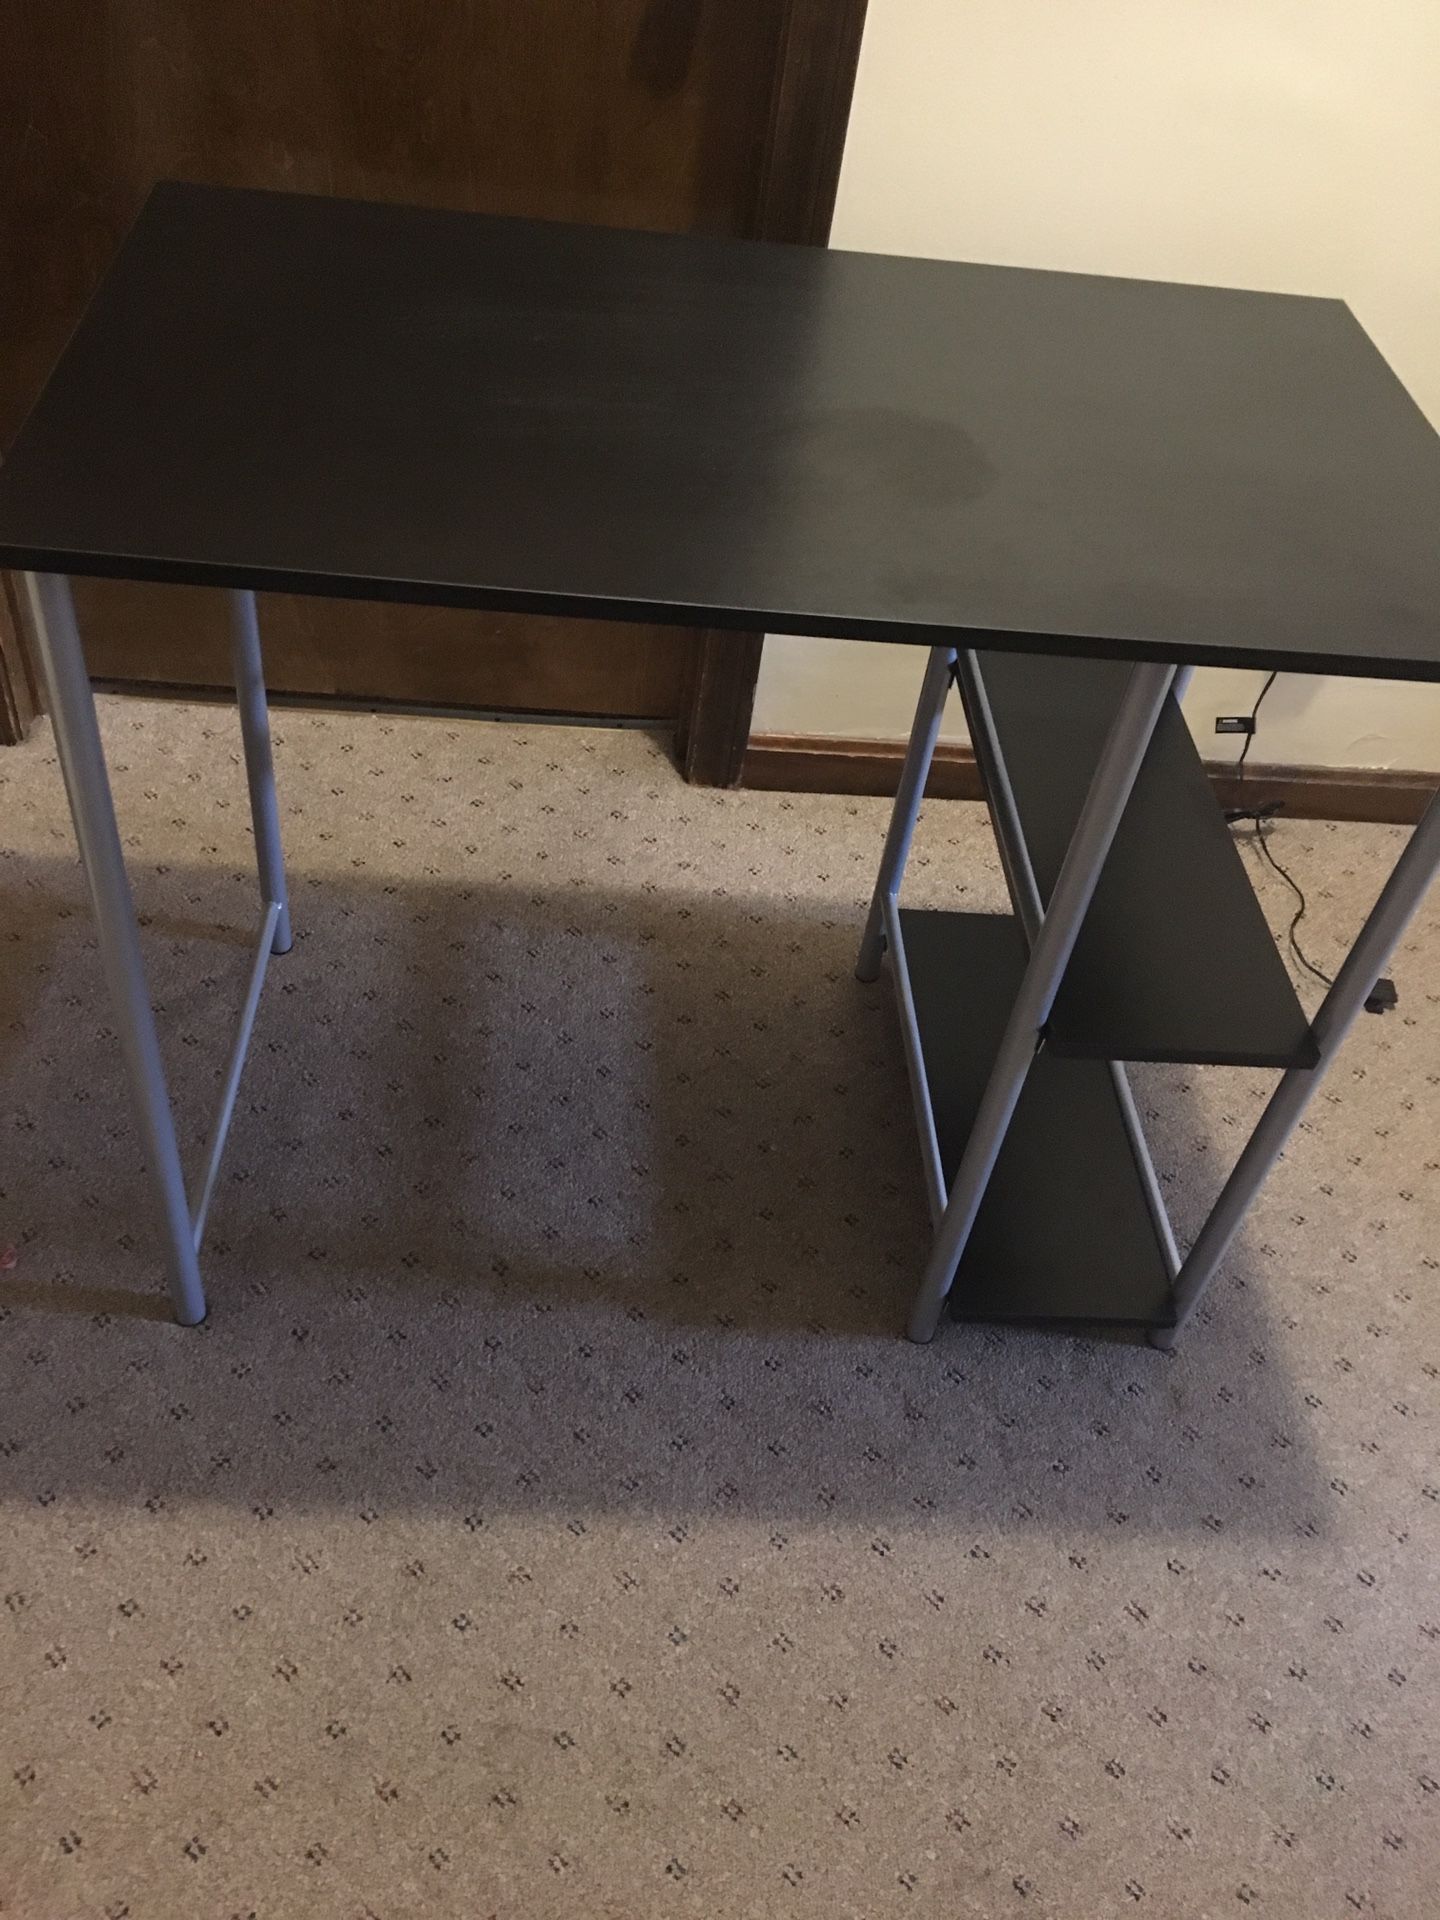 Small desk for $30